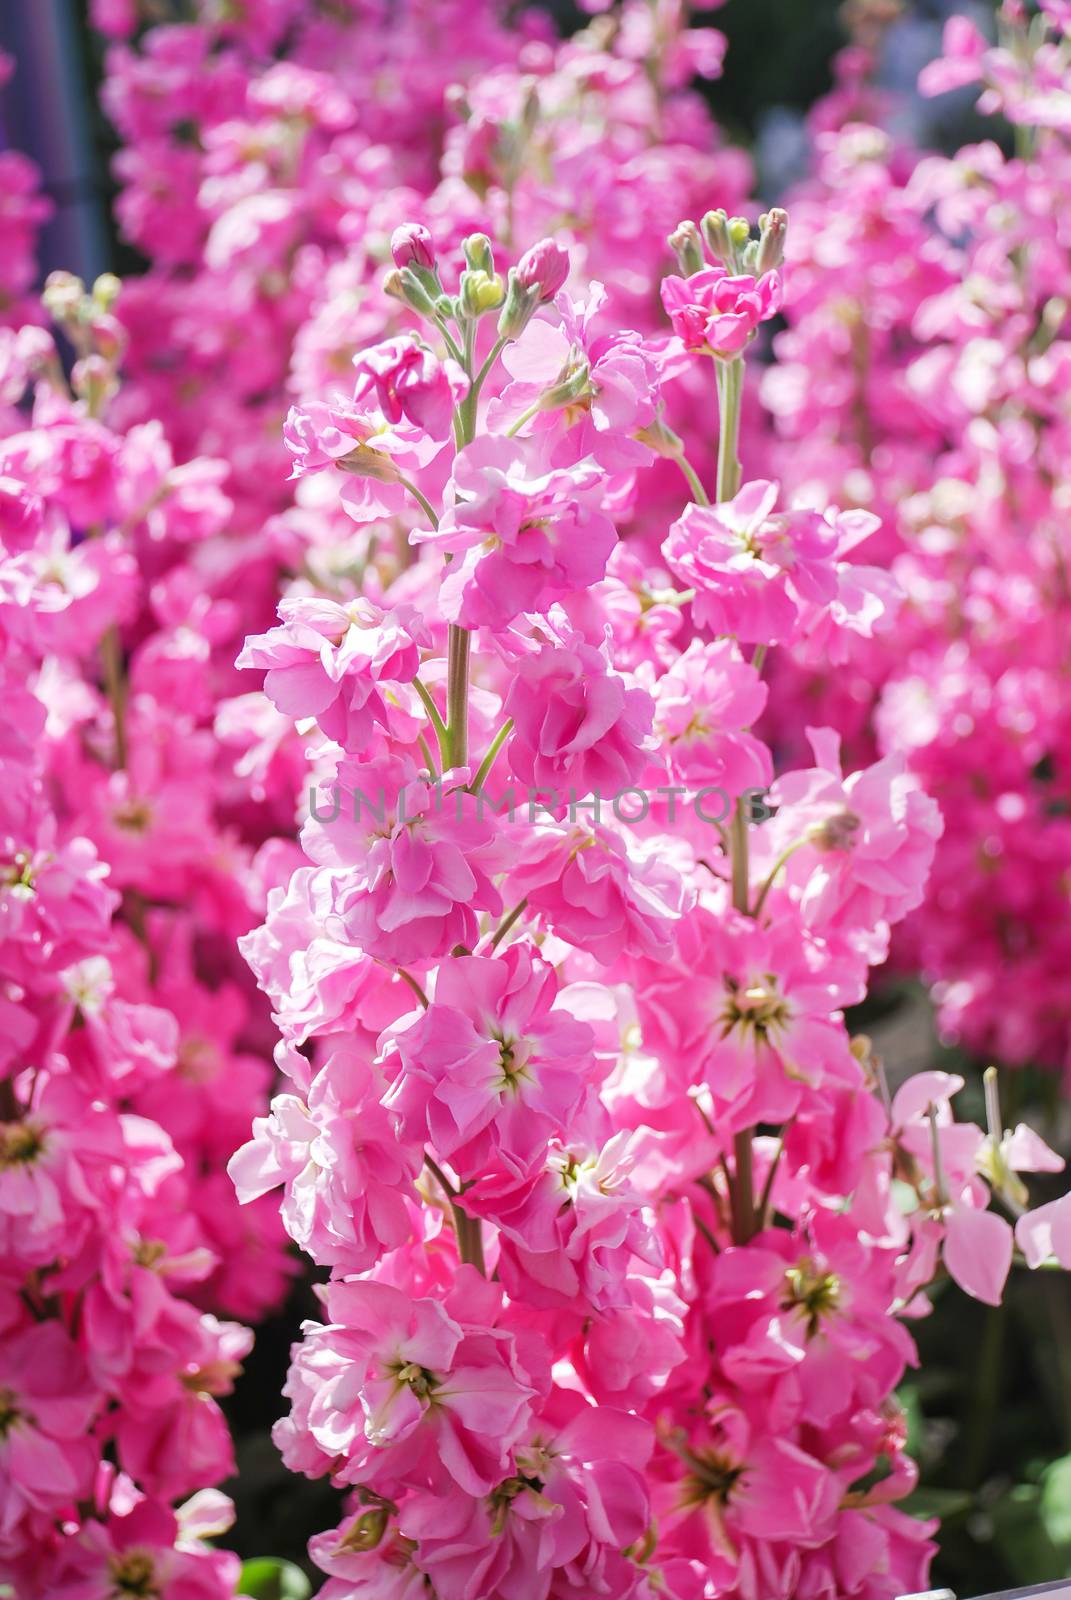 Matthiola incana flower, stock flowers, cut flowers in nursery, full bloom. Pink matthiola